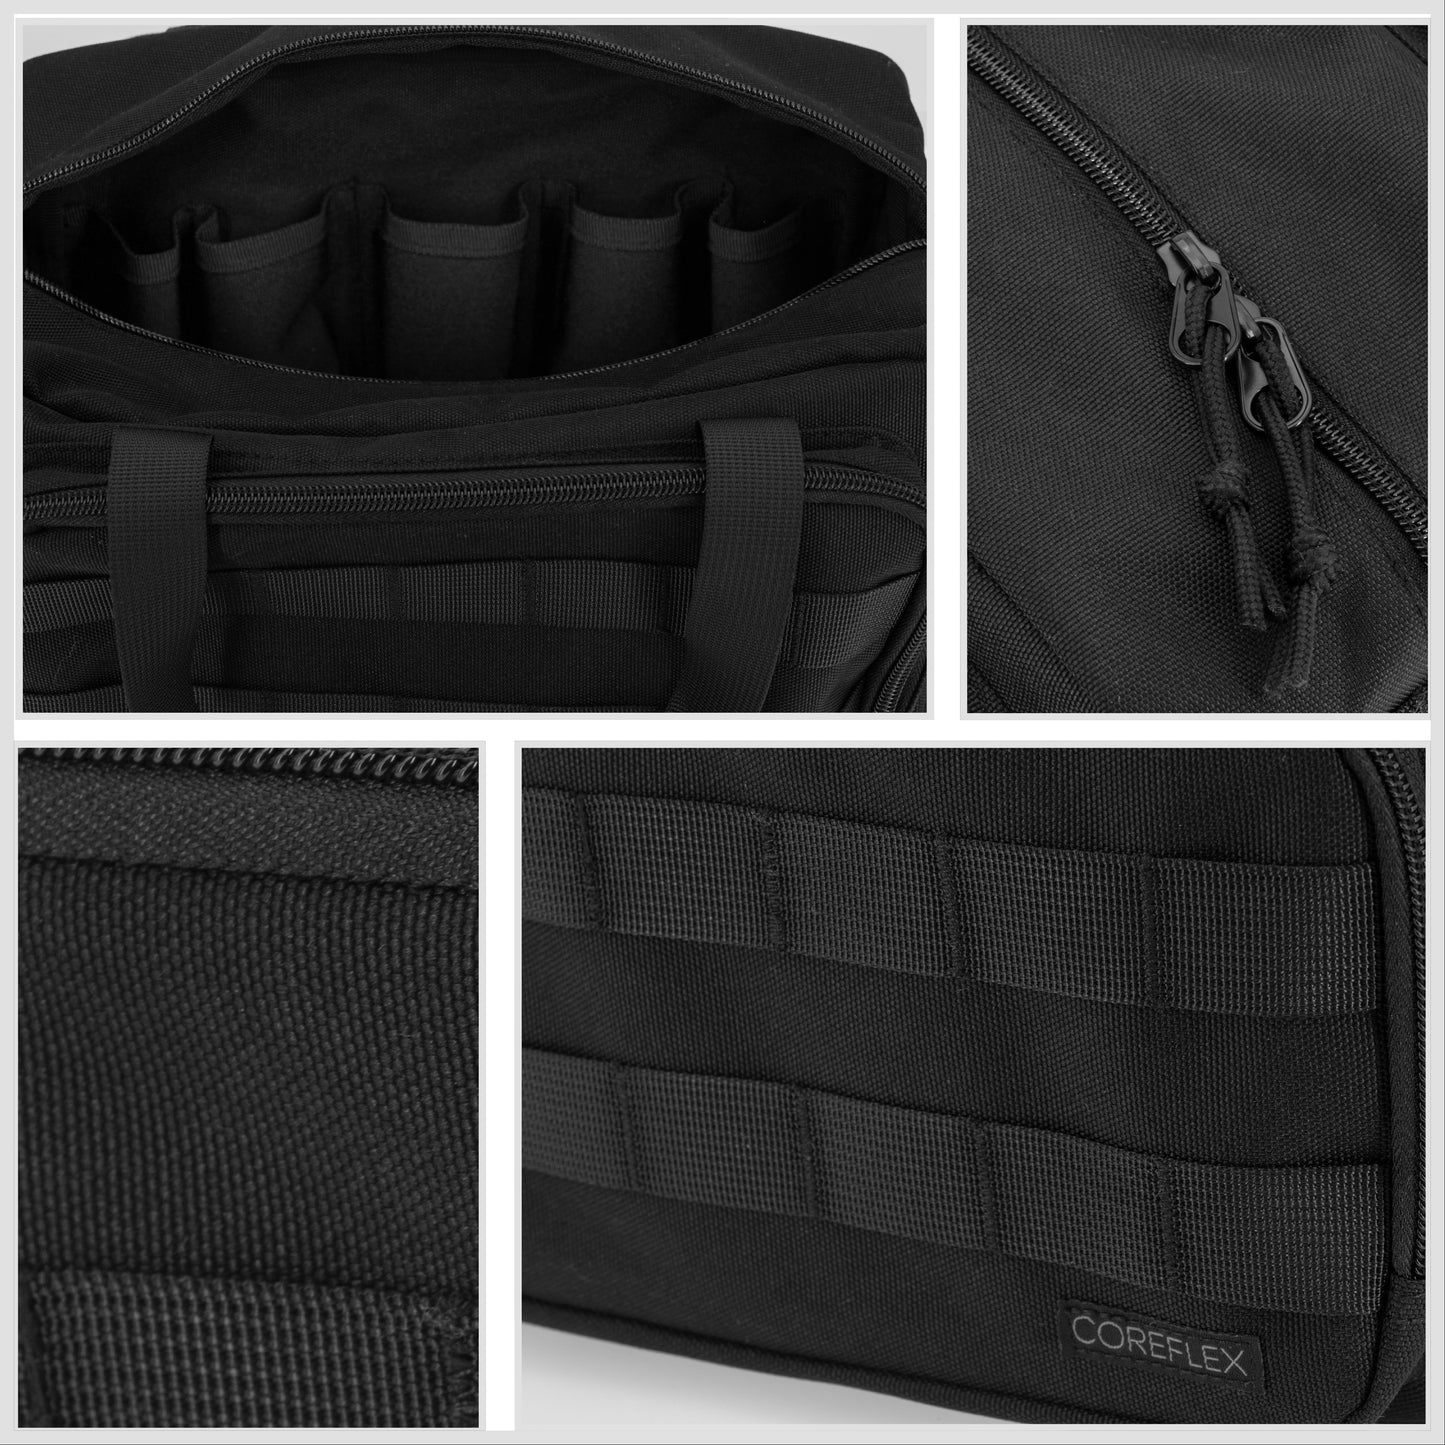 Coreflex 12-inch Heavy Duty Tool Bag, Tactical Bag, Gear Bag, Range Bag, EDC Bag